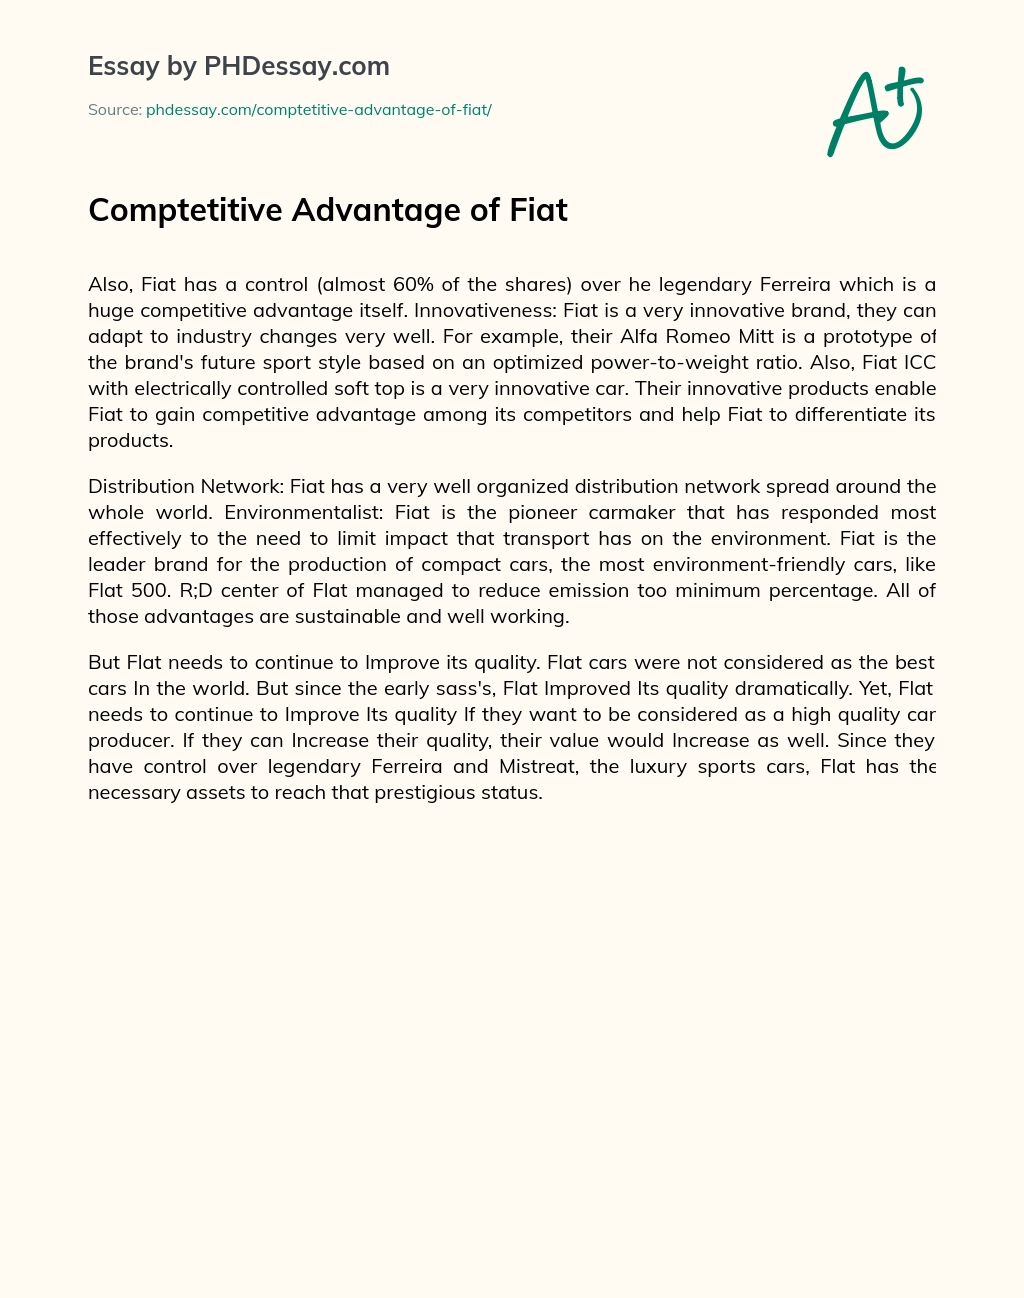 Comptetitive Advantage of Fiat essay